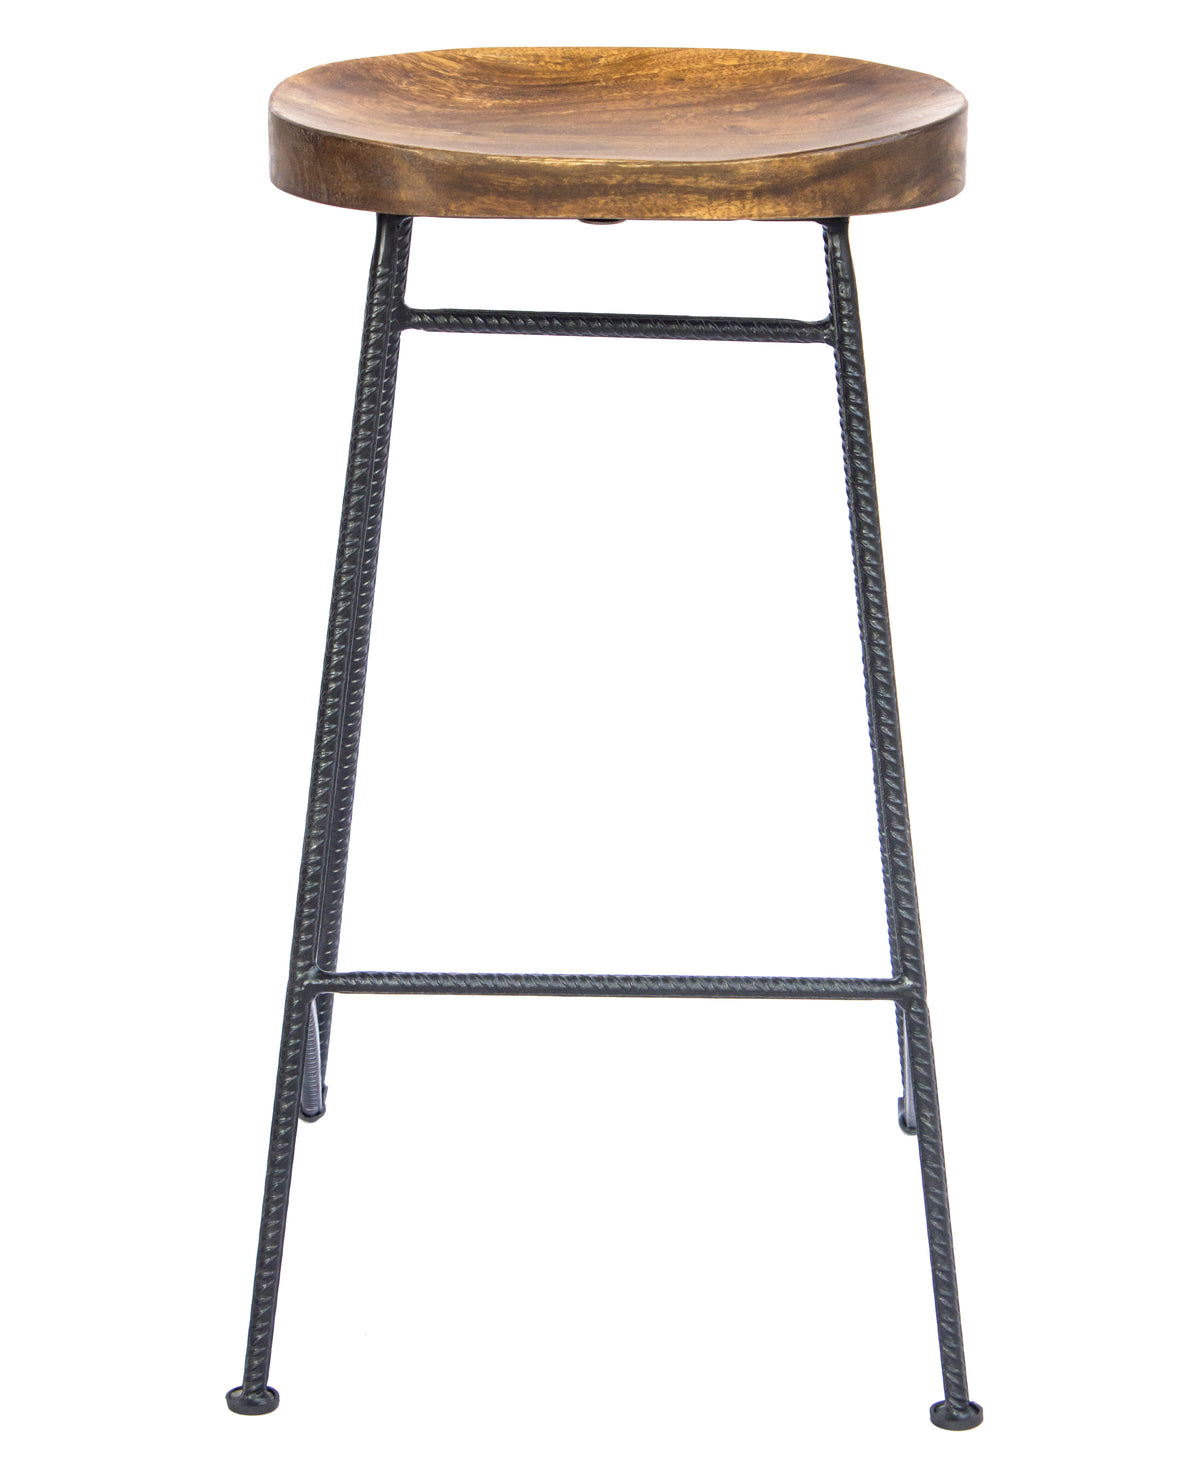 Mango Wood Saddle Seat Bar Stool With Iron Rod Legs, Brown and Black - UPT-183797